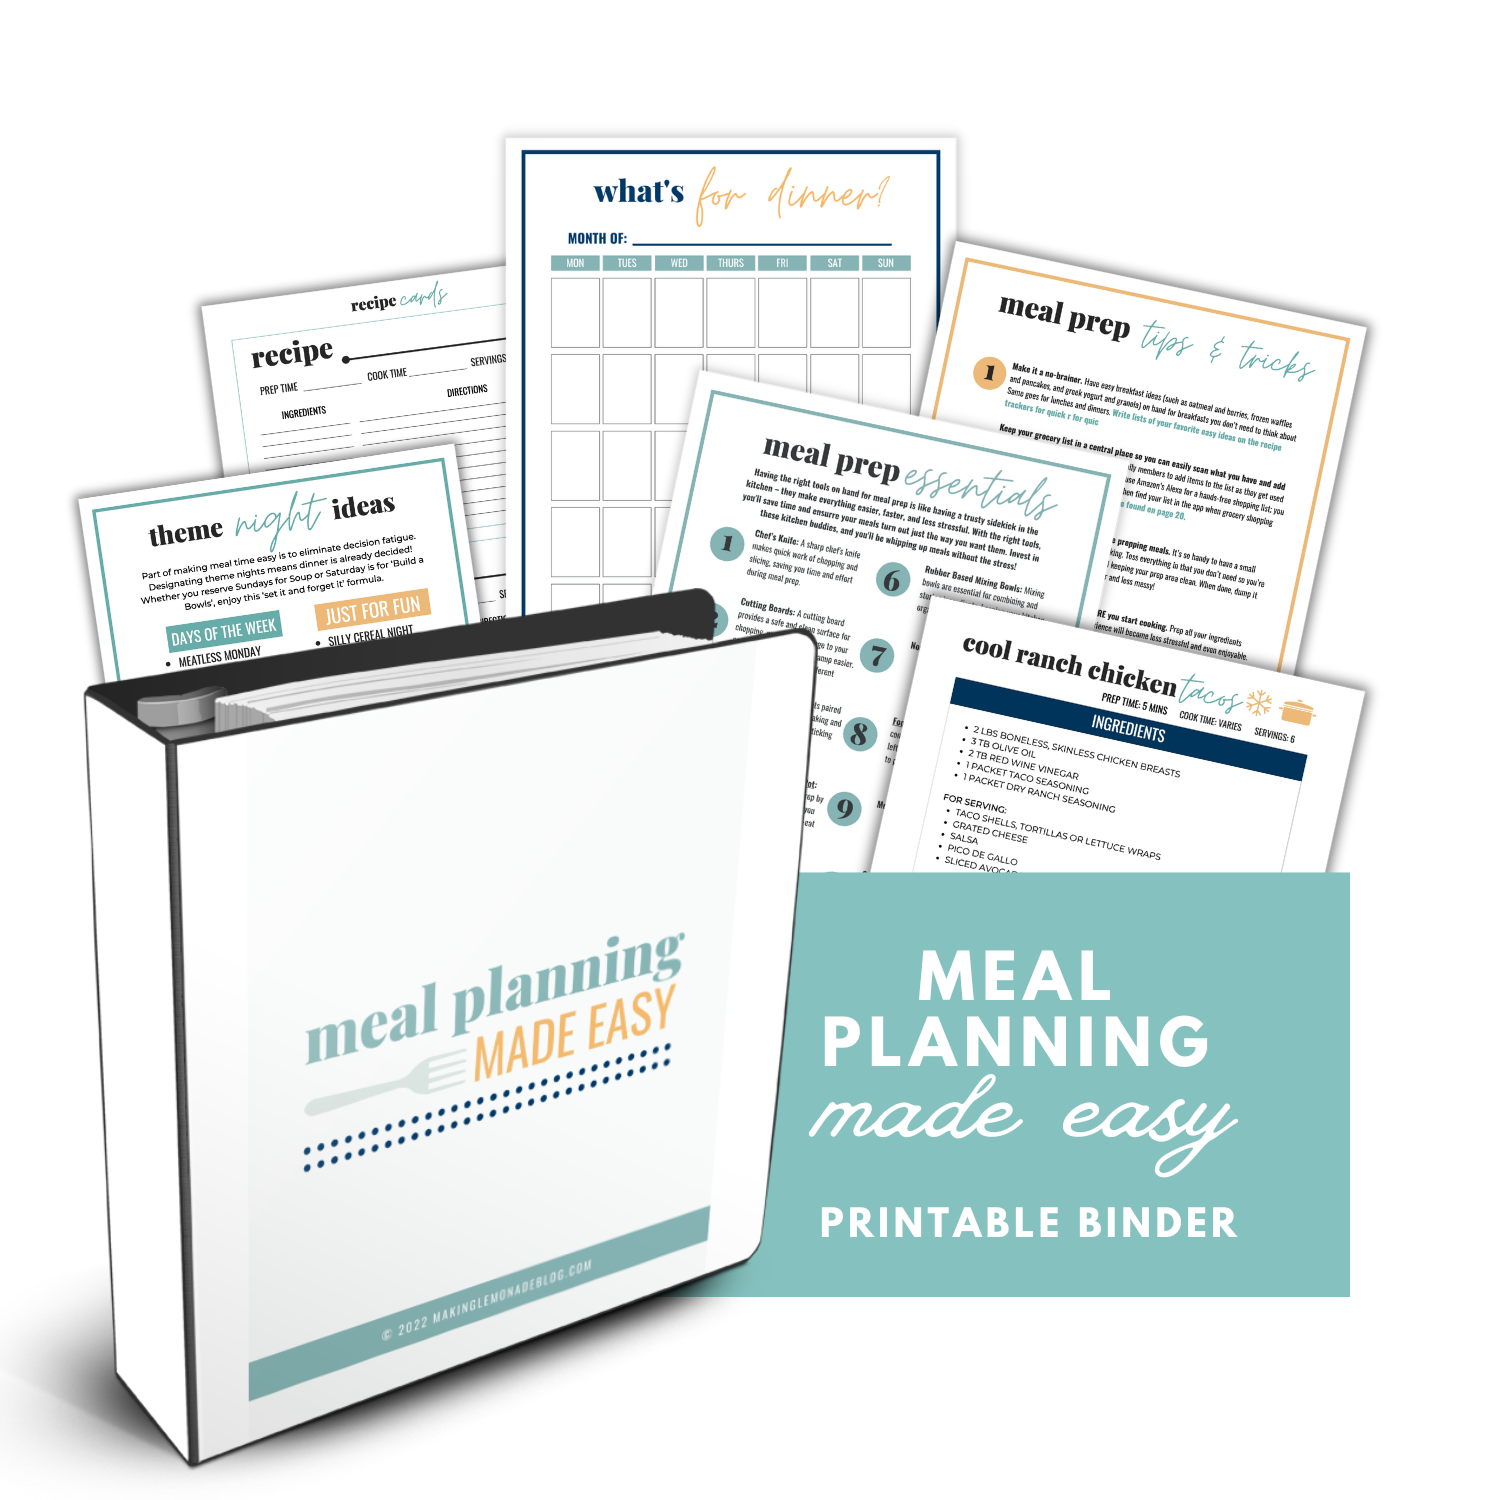 printable binder & recipes: meal planning made easy system mockup